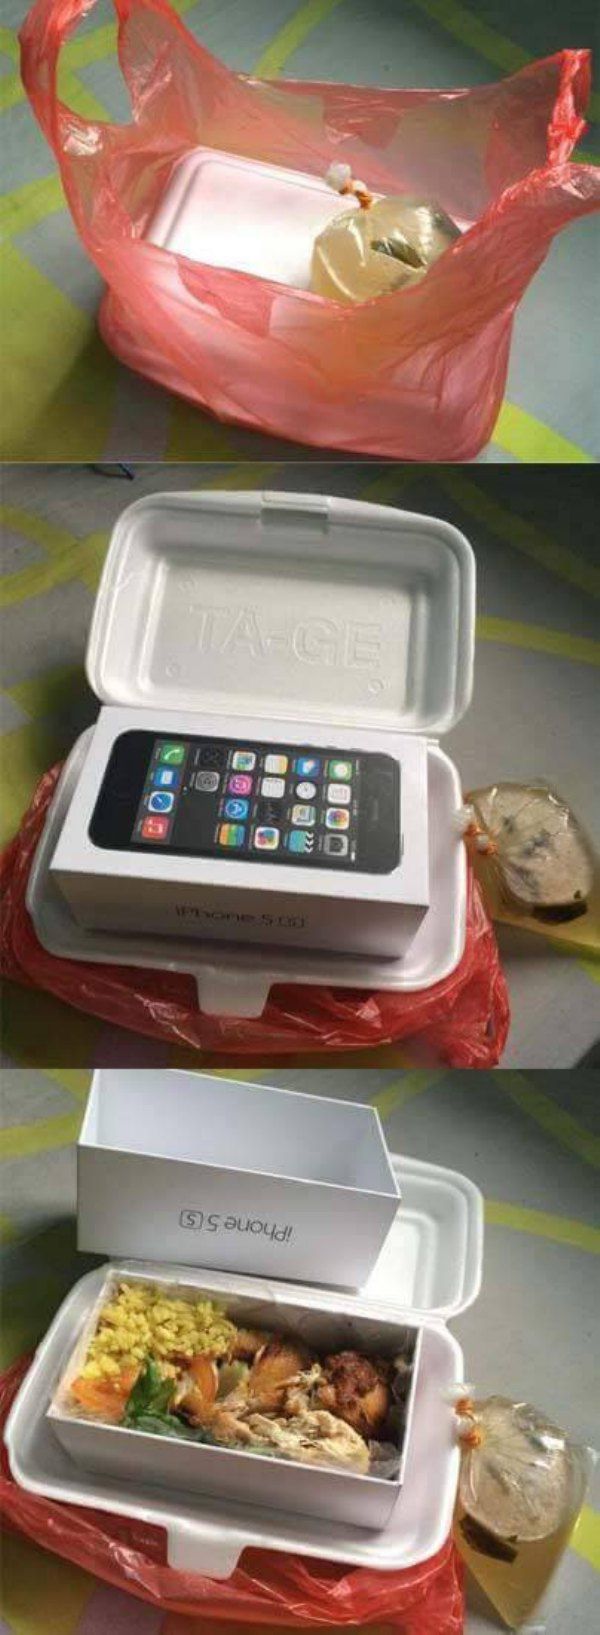 iphone gift pranks - iPhone 55 Too